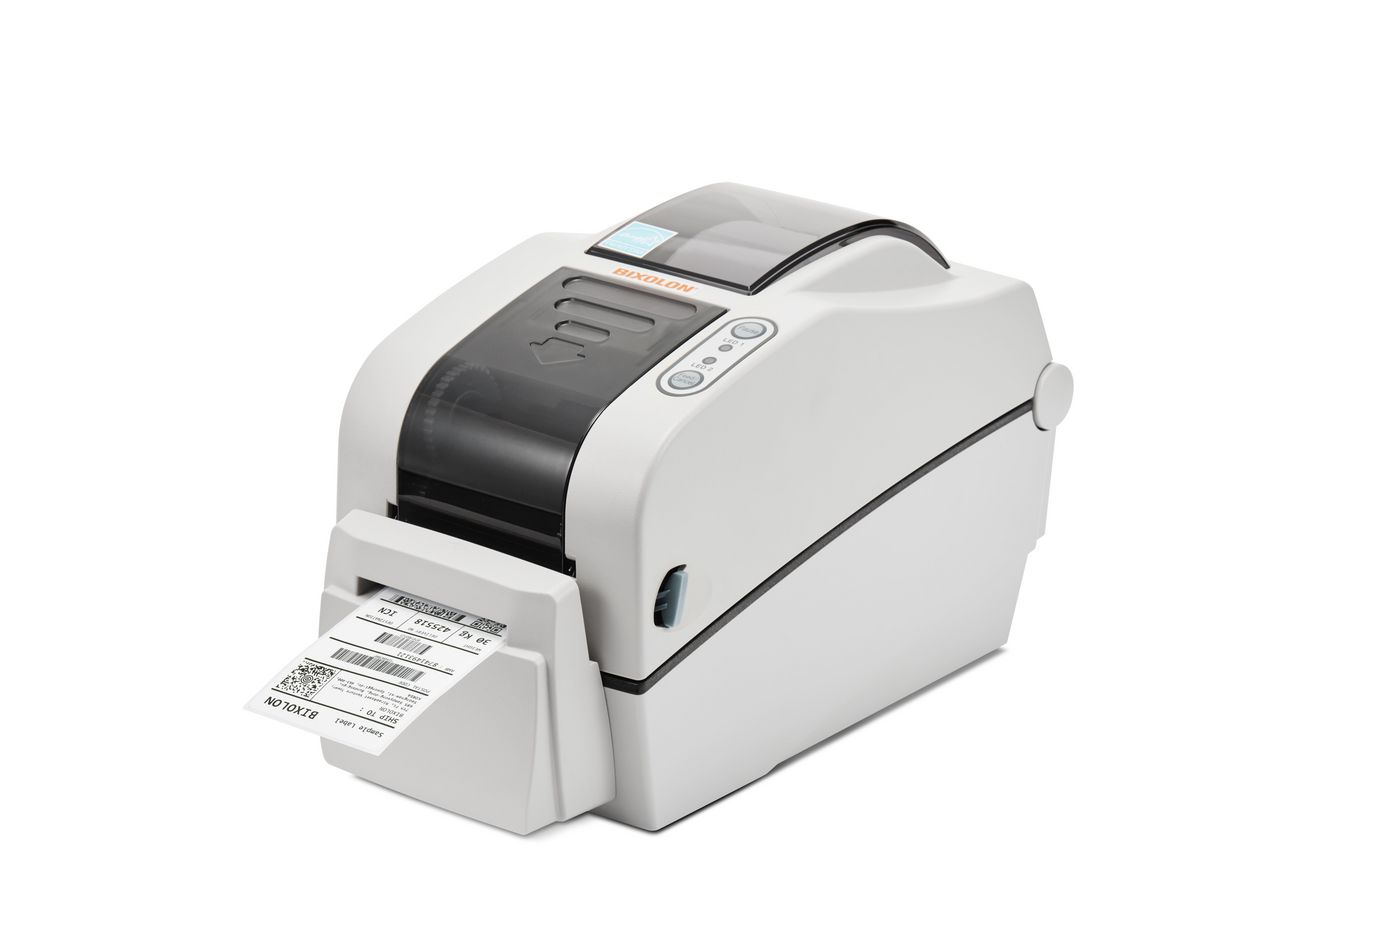 Slp-tx223c - Label Printer - Direct Thermal - USB / Serial / Parallel